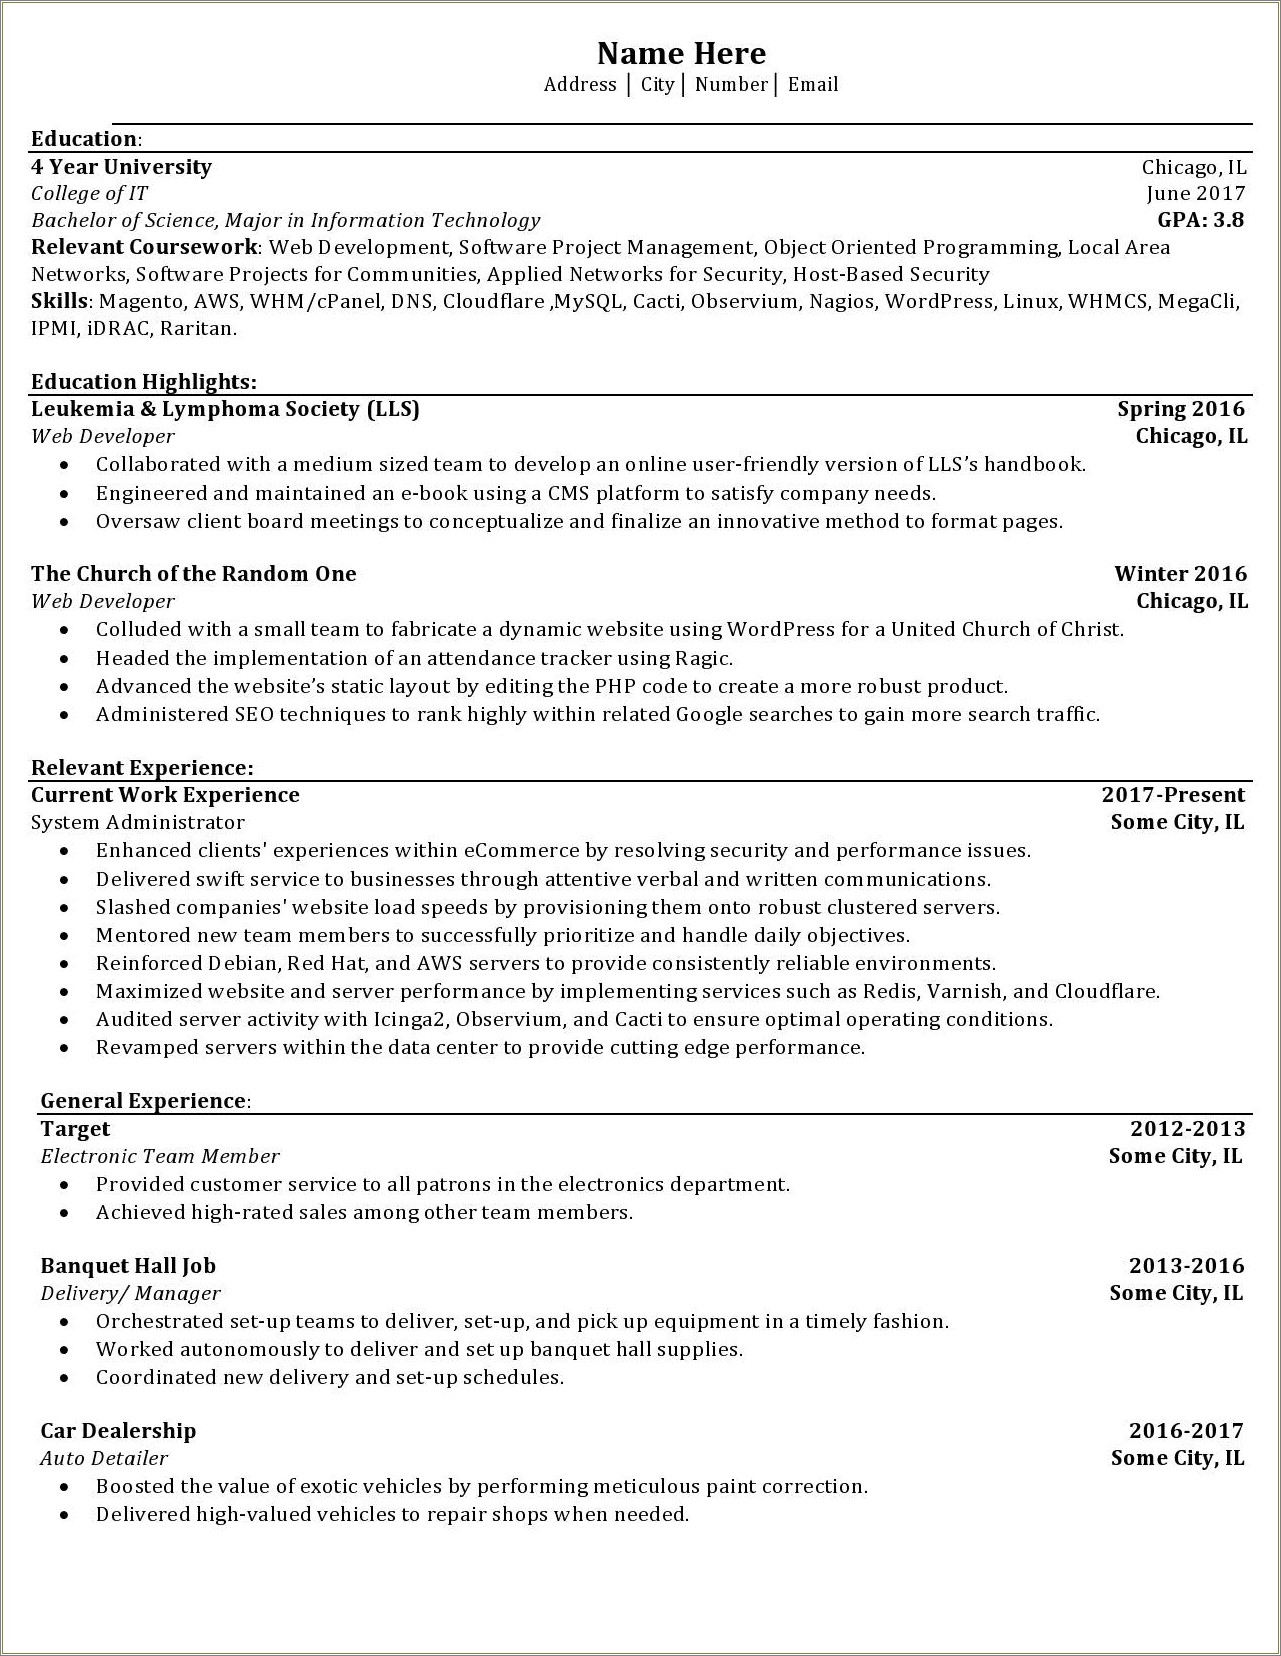 Auto Detailer Job Description For Resume